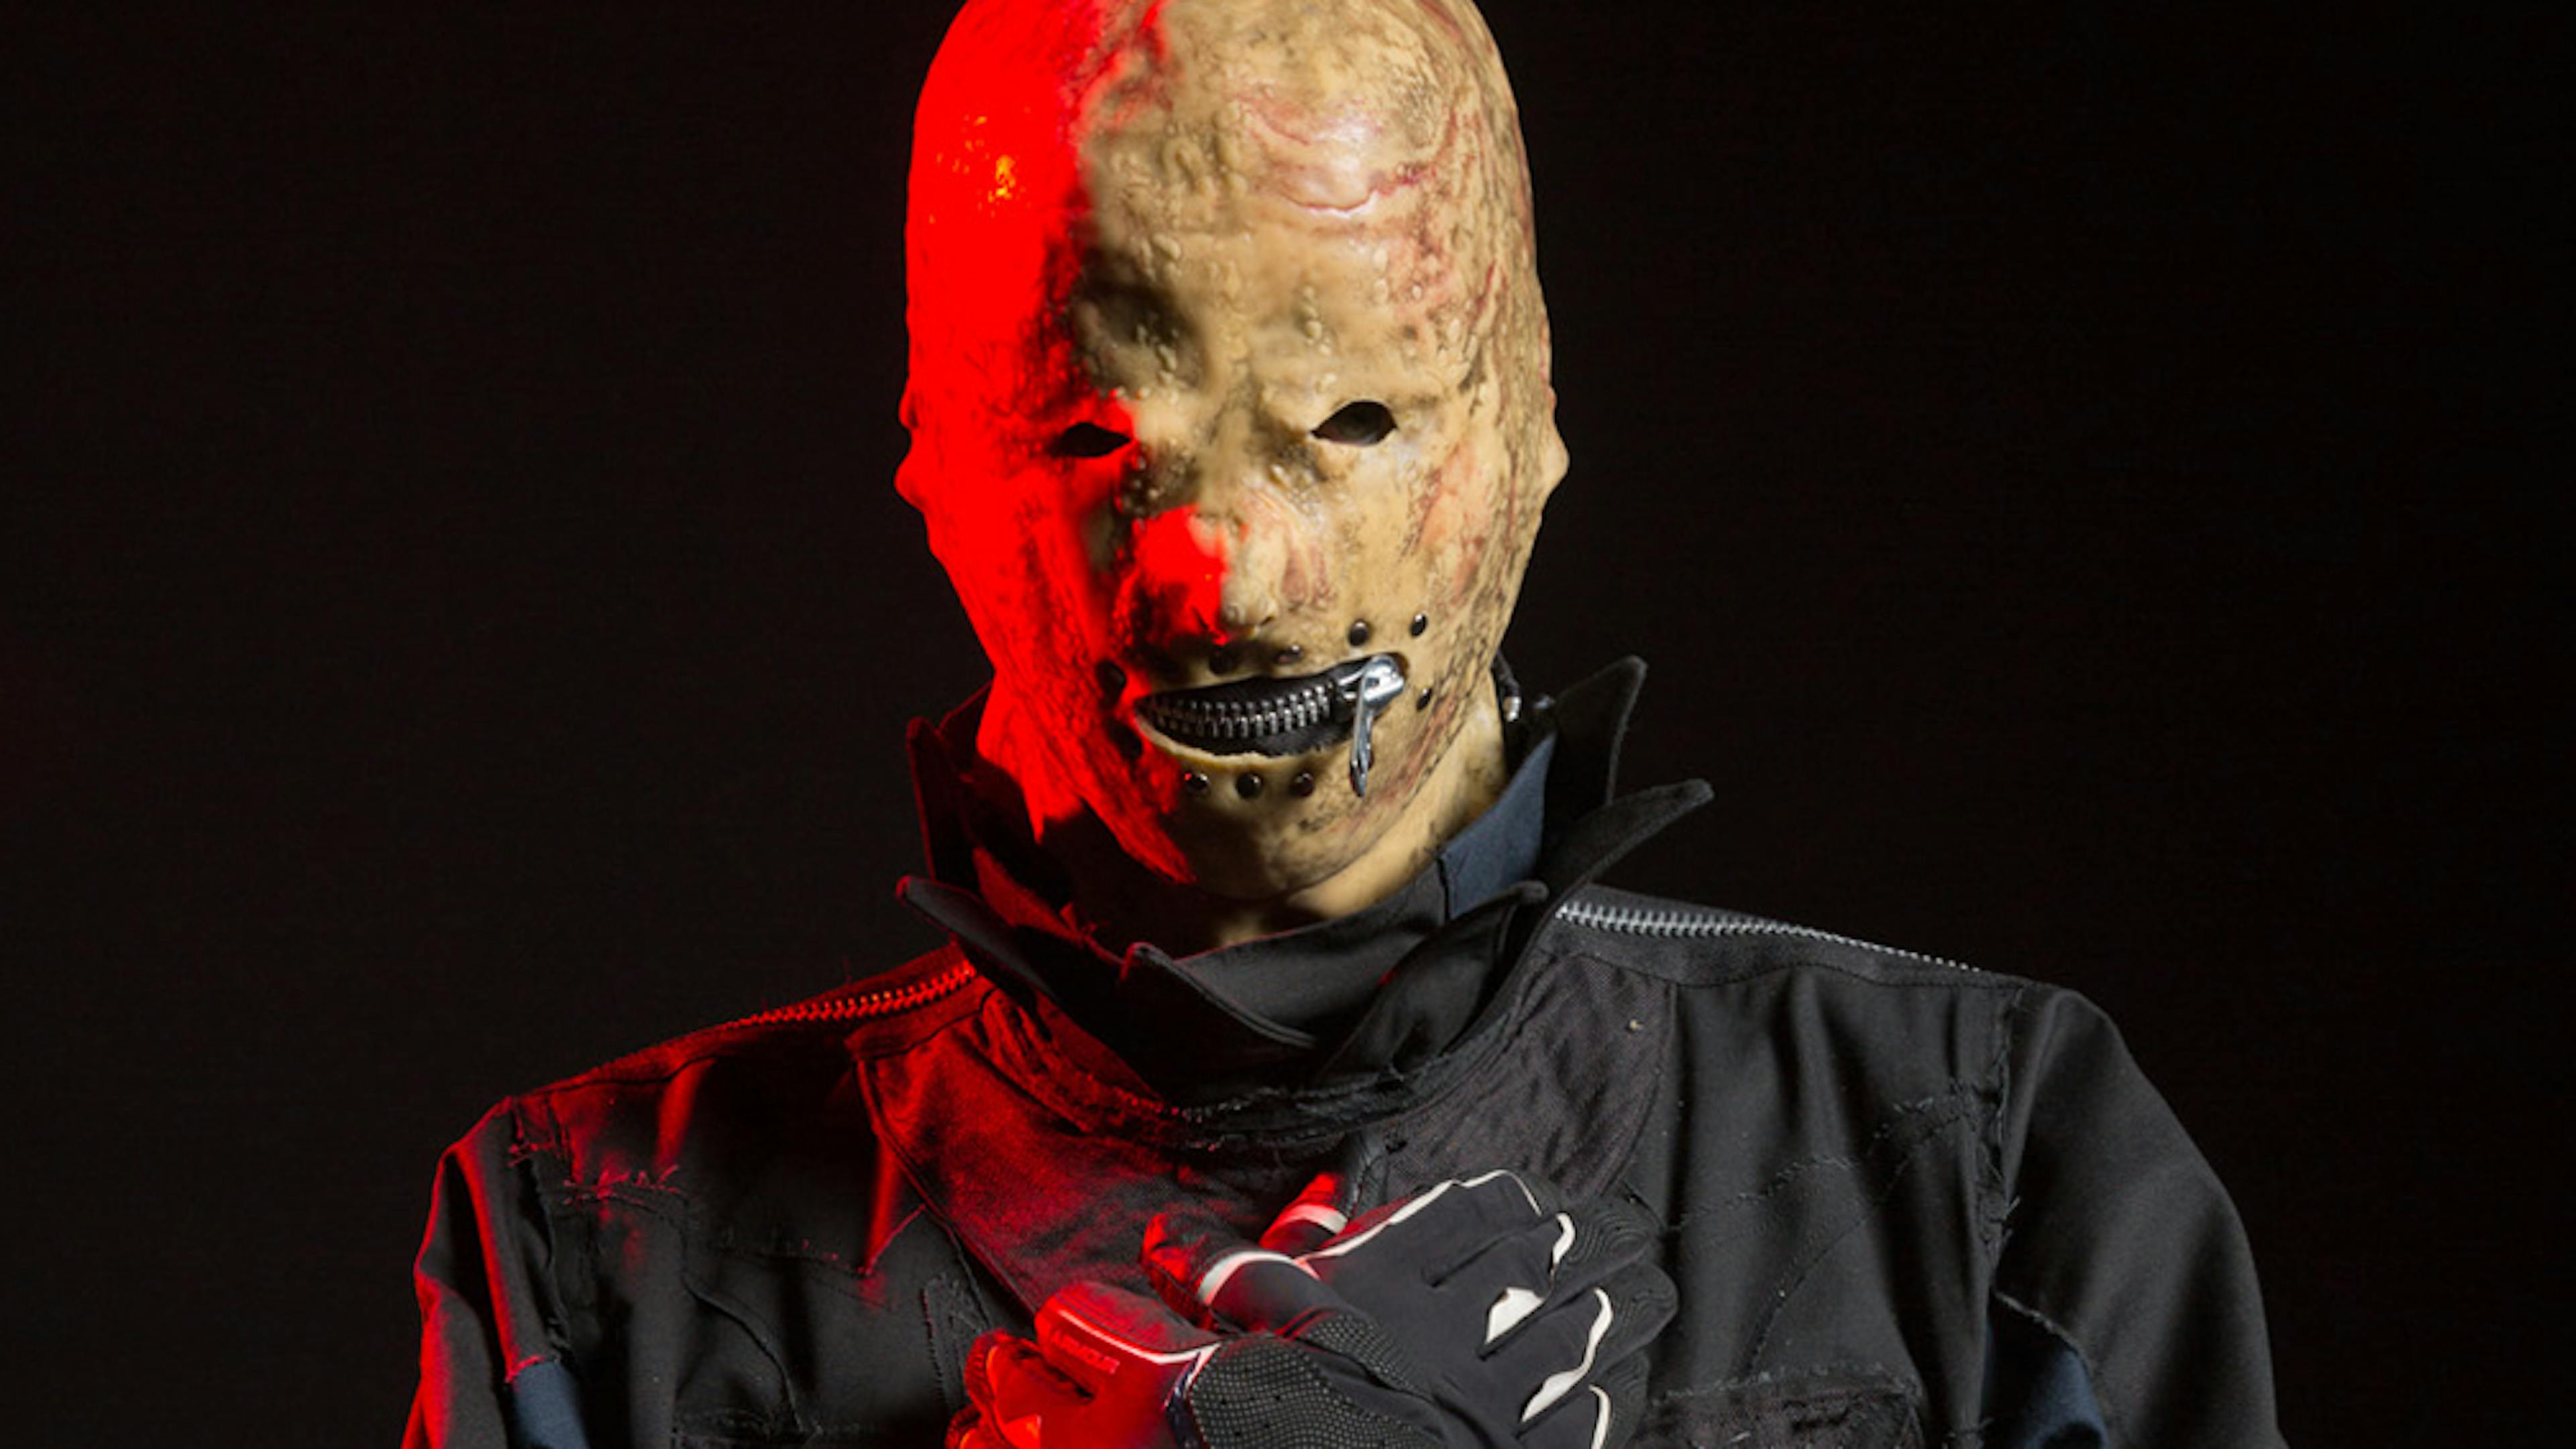 Slipknot's Tortilla Man Wore An Actual Tortilla On His Face Friday Night